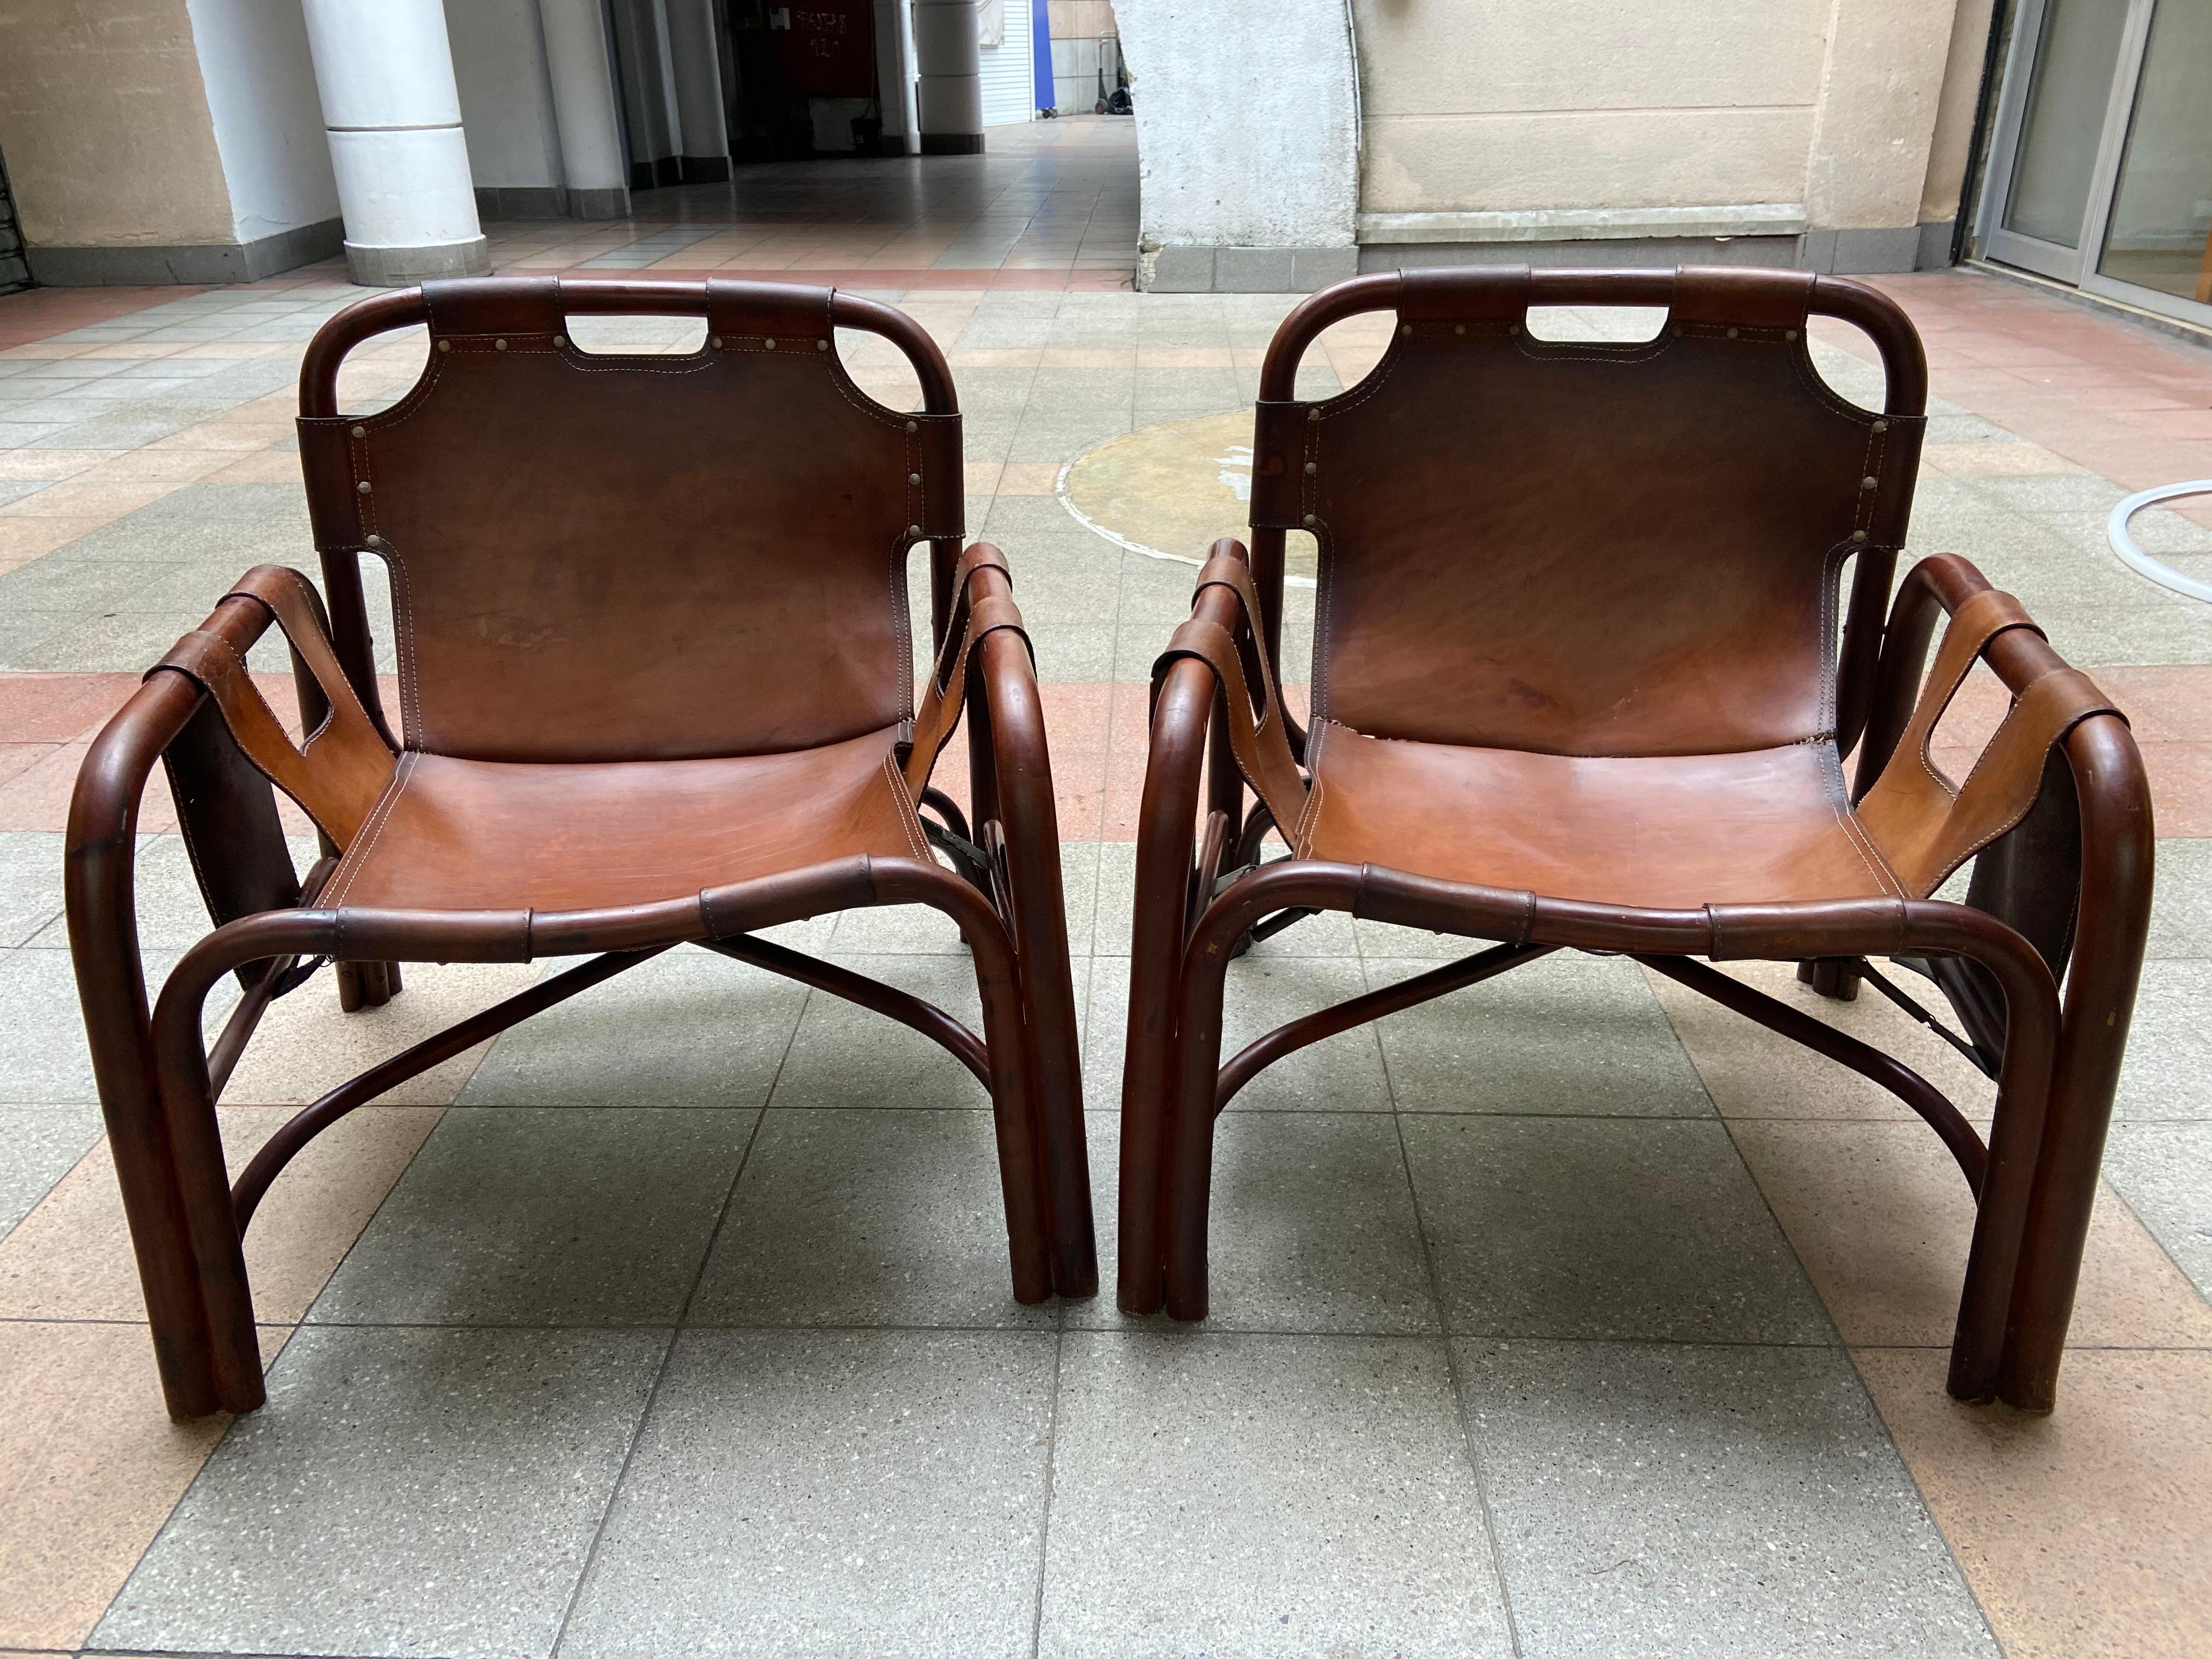 Pair of armchairs - Tito Agnoli
Bamboo and leather 
Bonacina Edition 
Measures: L 268 x W 72 x H 70 cm
circa 1960 
3400 Euros.